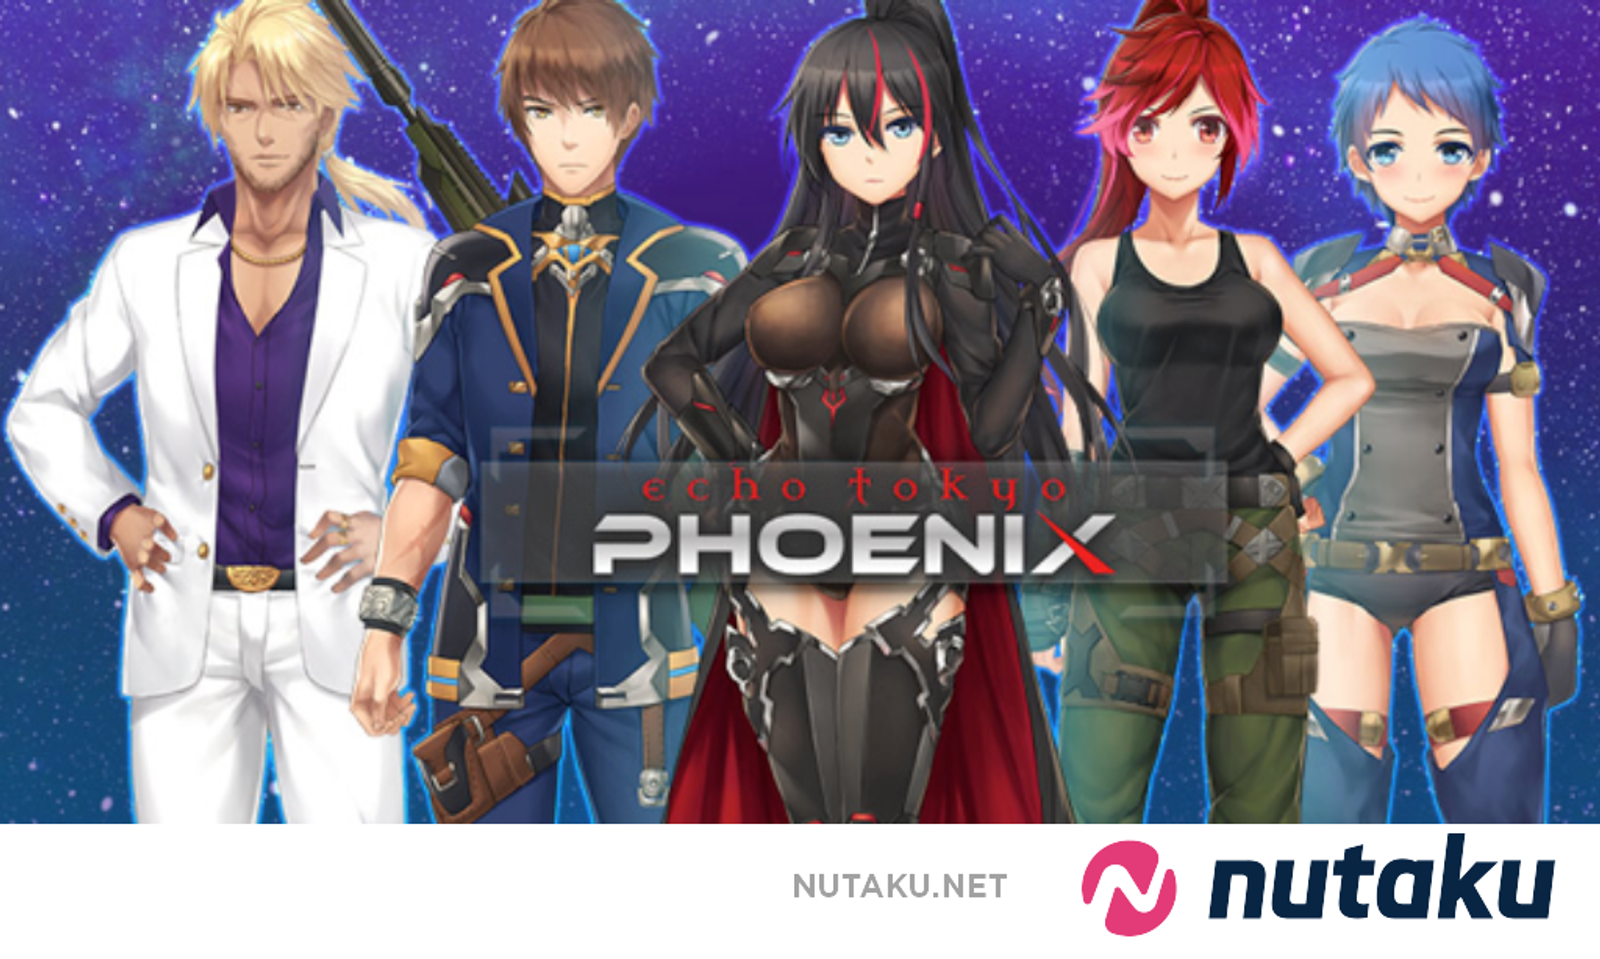 Nutaku.net Launches Echo Tokyo: Phoenix Adventure Game